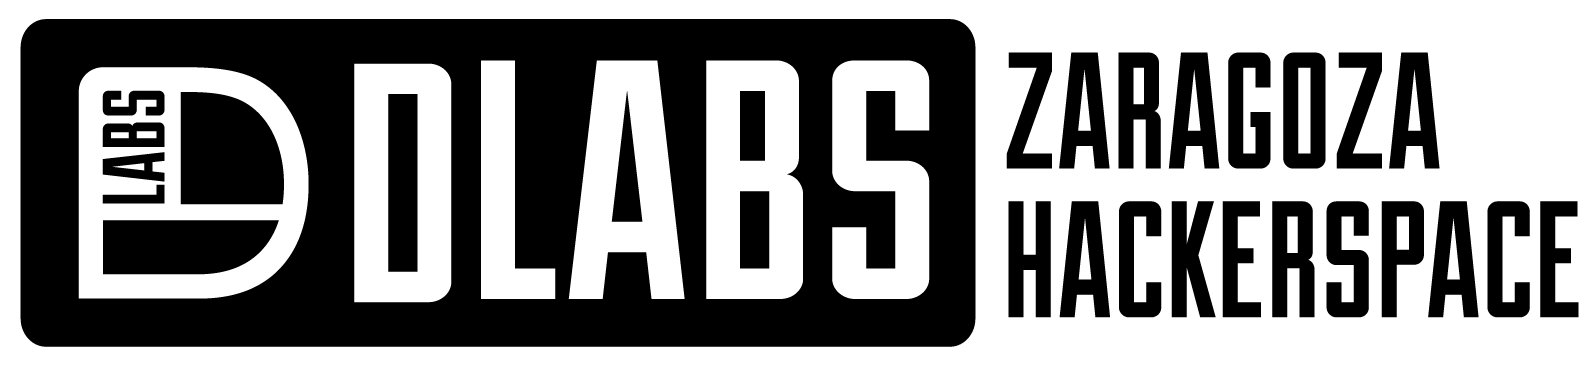 Dlabs logo